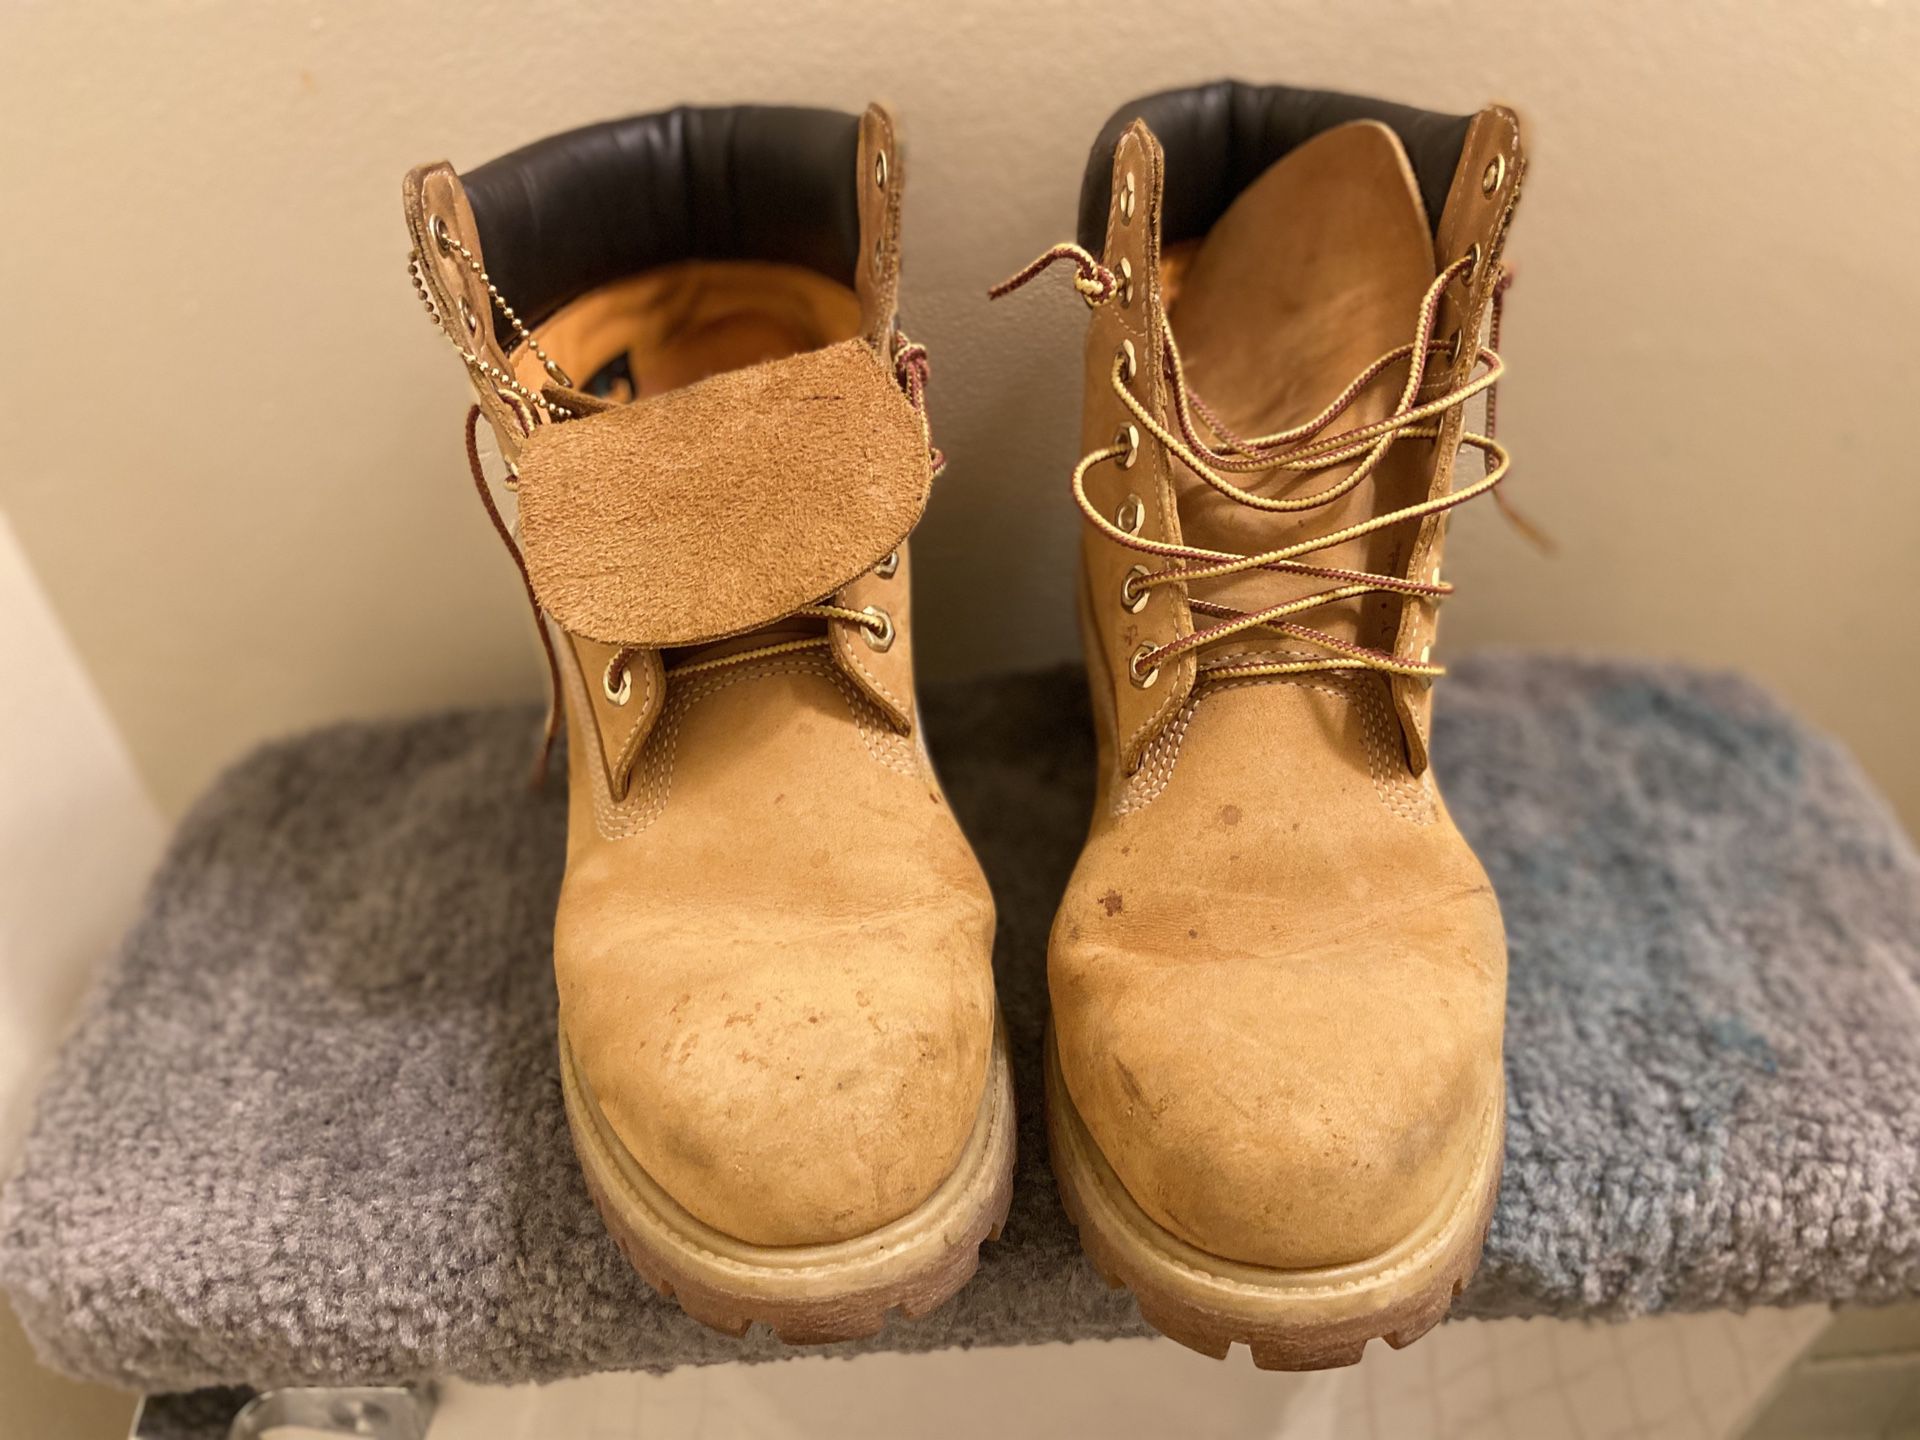 Timberland work boots